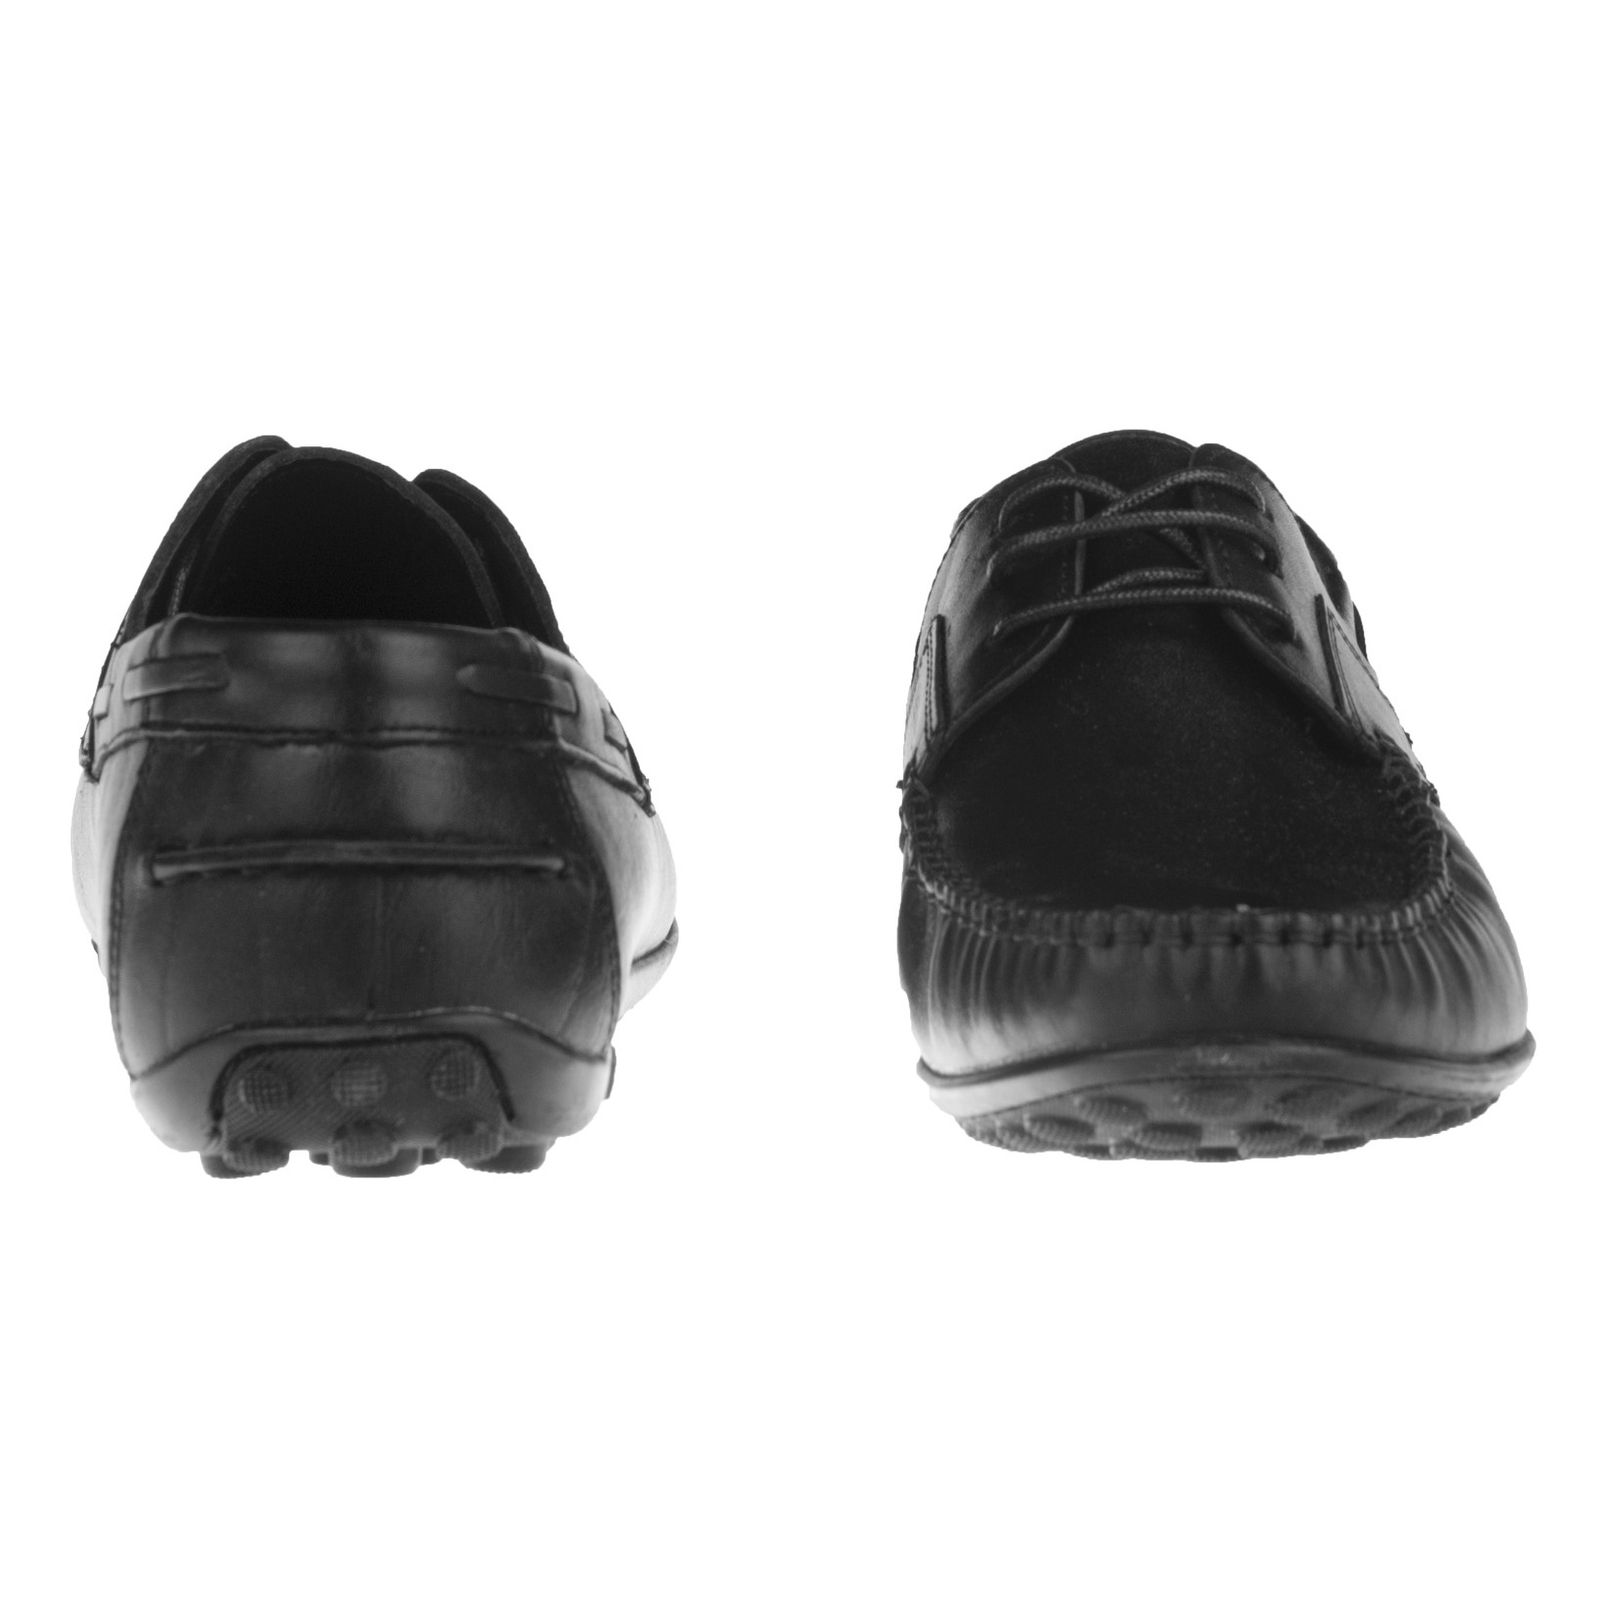 کفش روزمره مردانه بلوط مدل 7126G503-101 - مشکی - 5